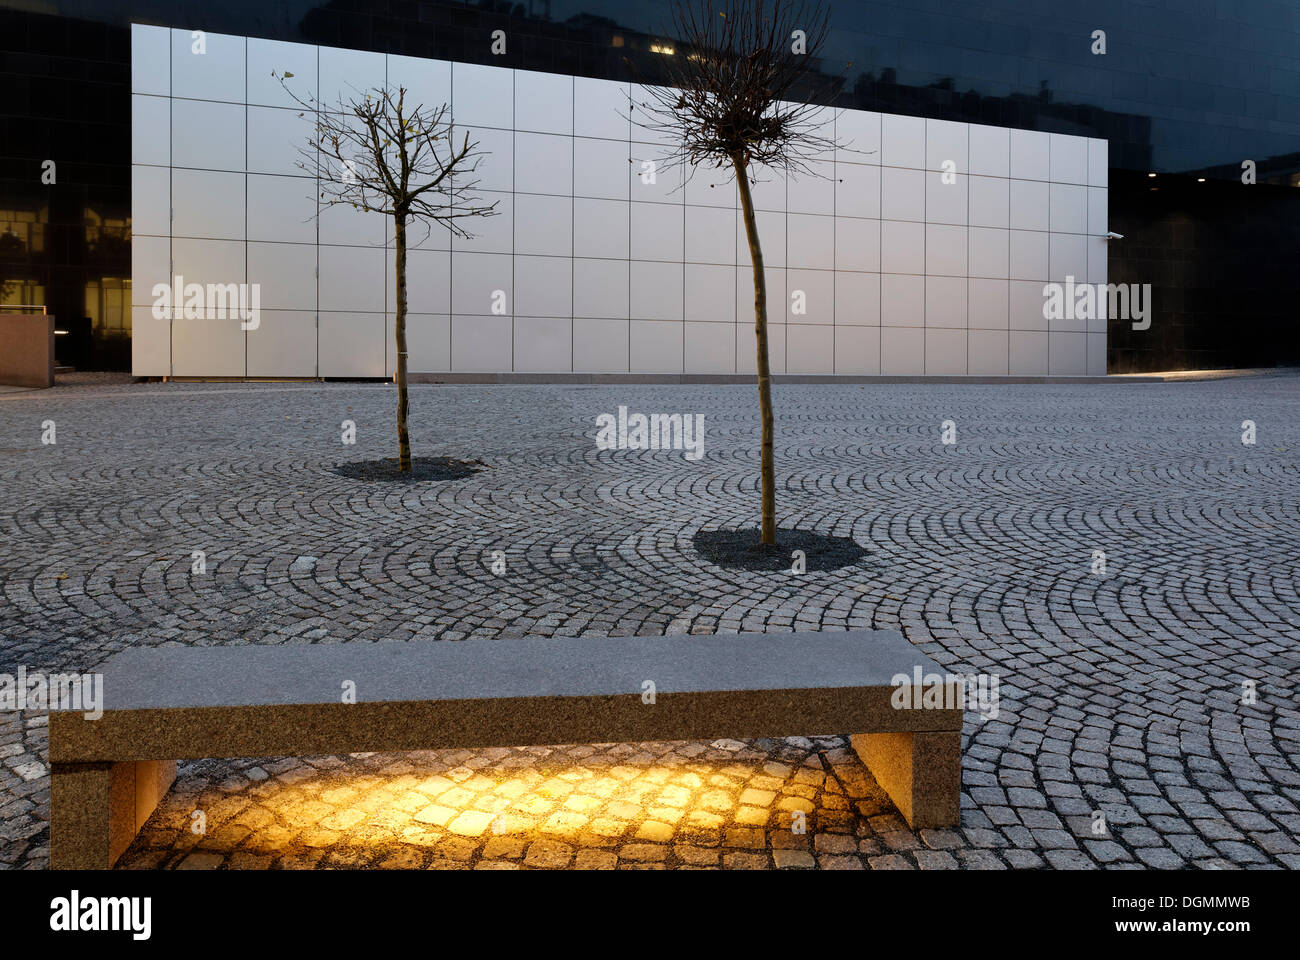 Paul-Klee-Platz square, illuminated stone bench, Kunstsammlung Nordrhein-Westfalen arts collection, K20 building, Duesseldorf Stock Photo